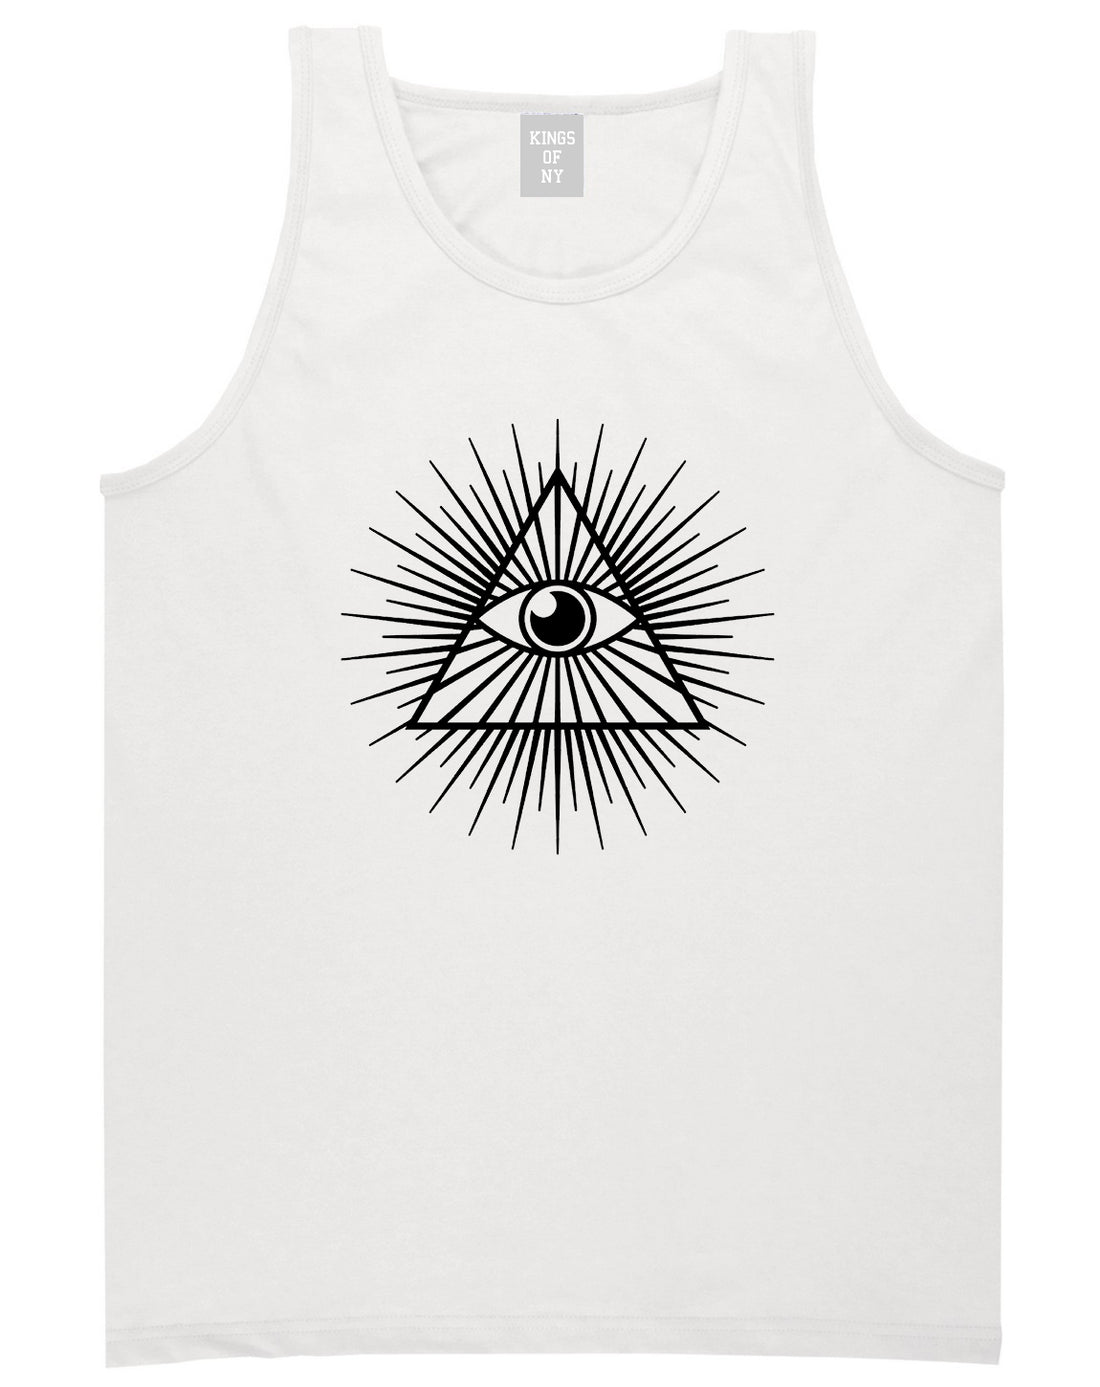 Eye Of Providence illuminati Mens Tank Top Shirt White